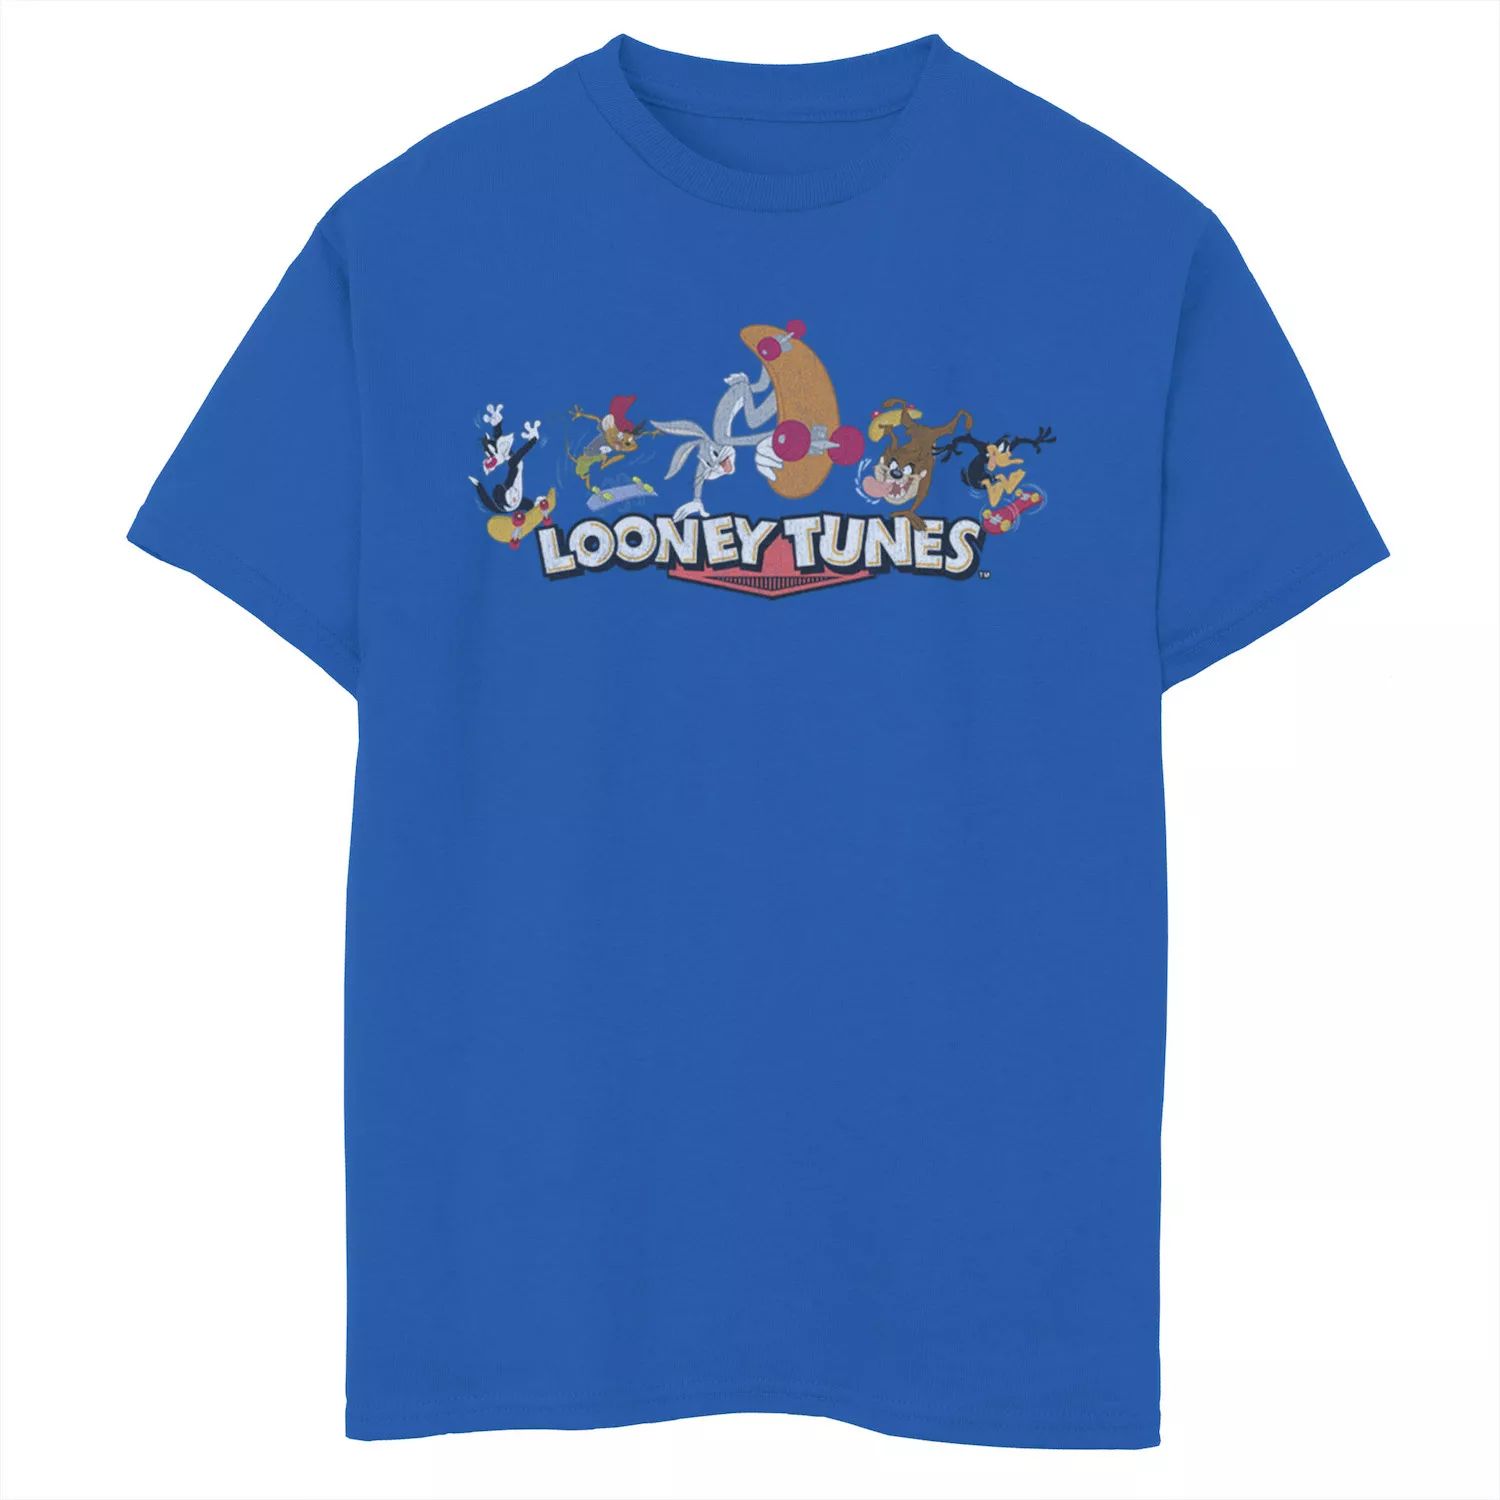 Футболка с рисунком Looney Tunes Skate Tunes для мальчиков 8–20 лет, групповая съемка Licensed Character